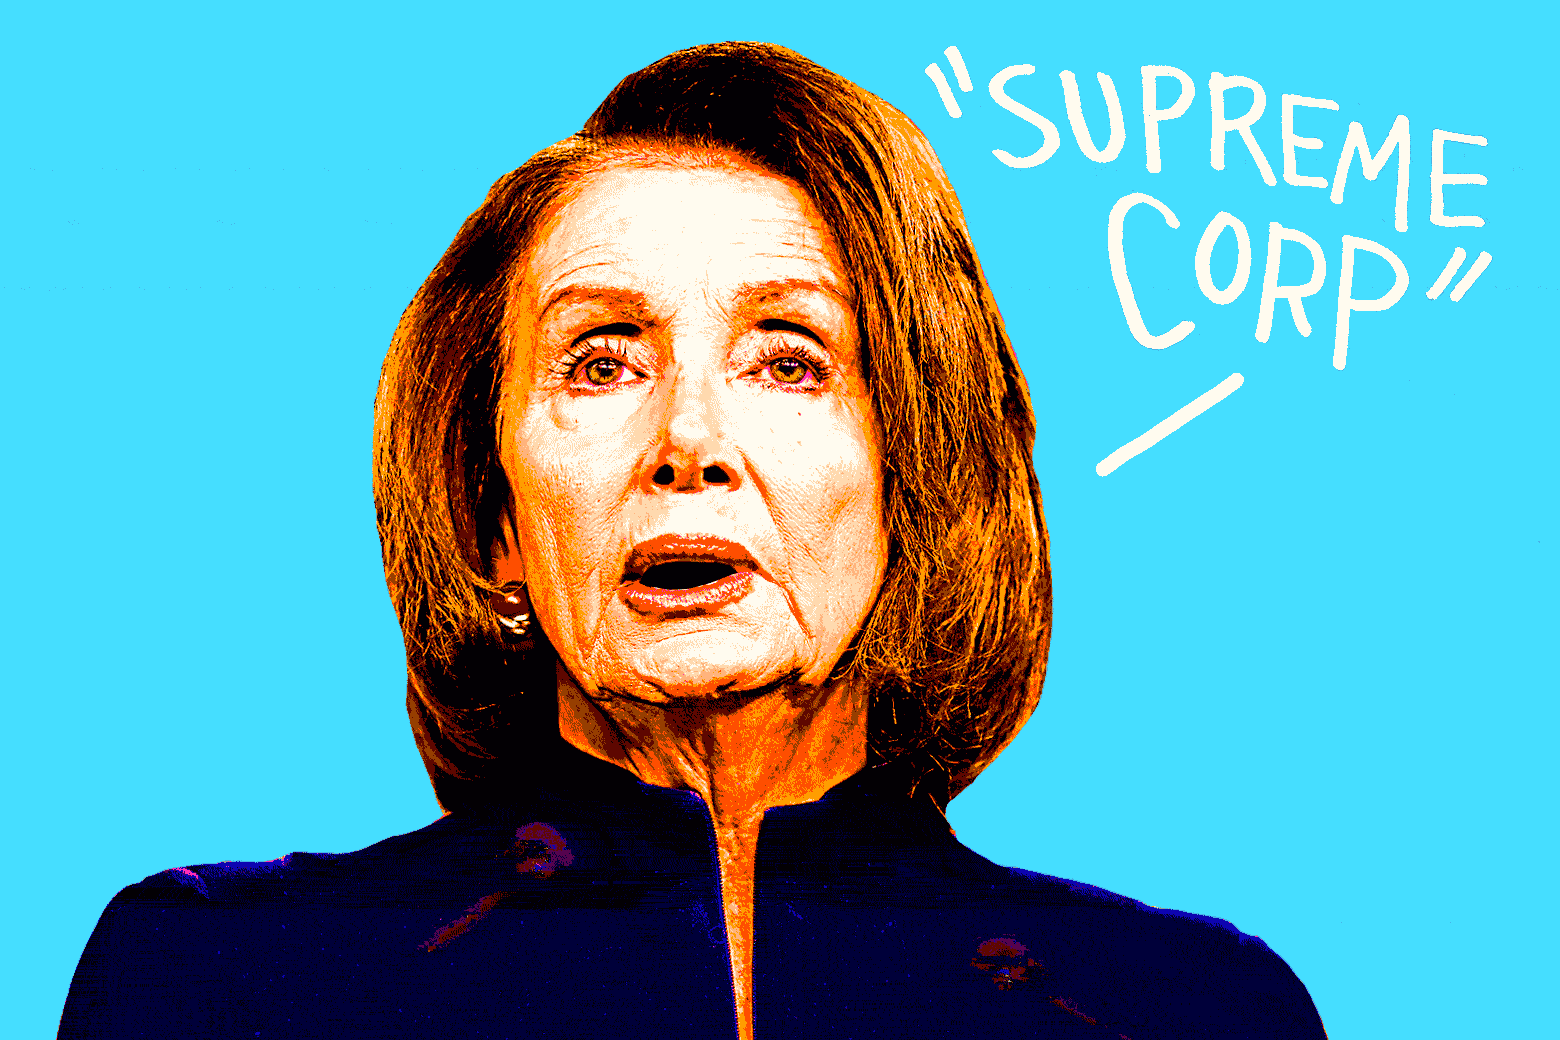 Nancy Pelosi animation with the phrase "Supreme Corp."